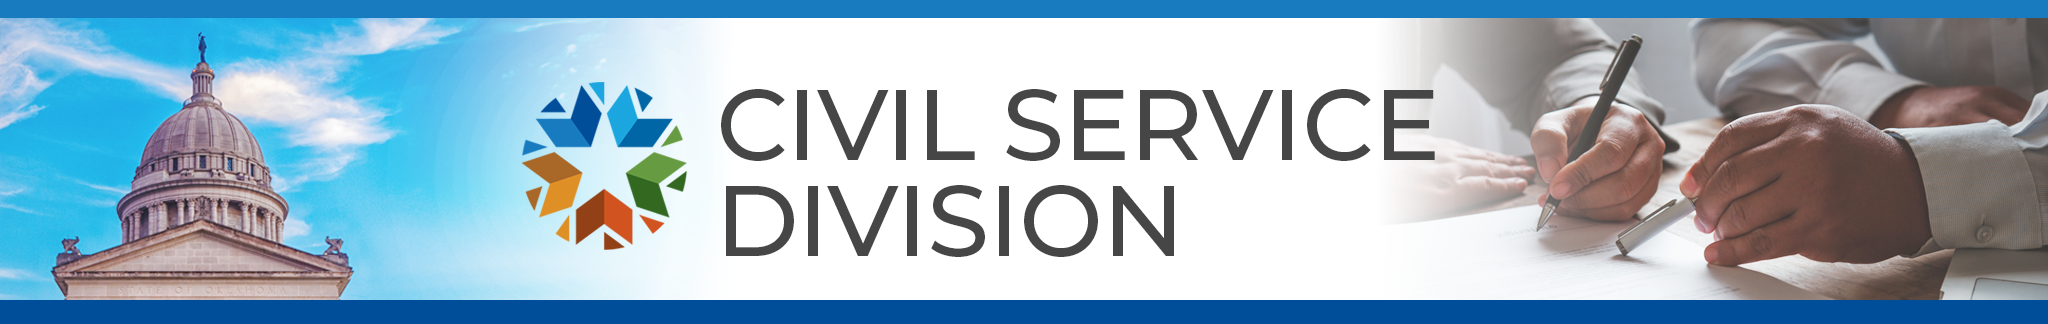 Civil Service Division